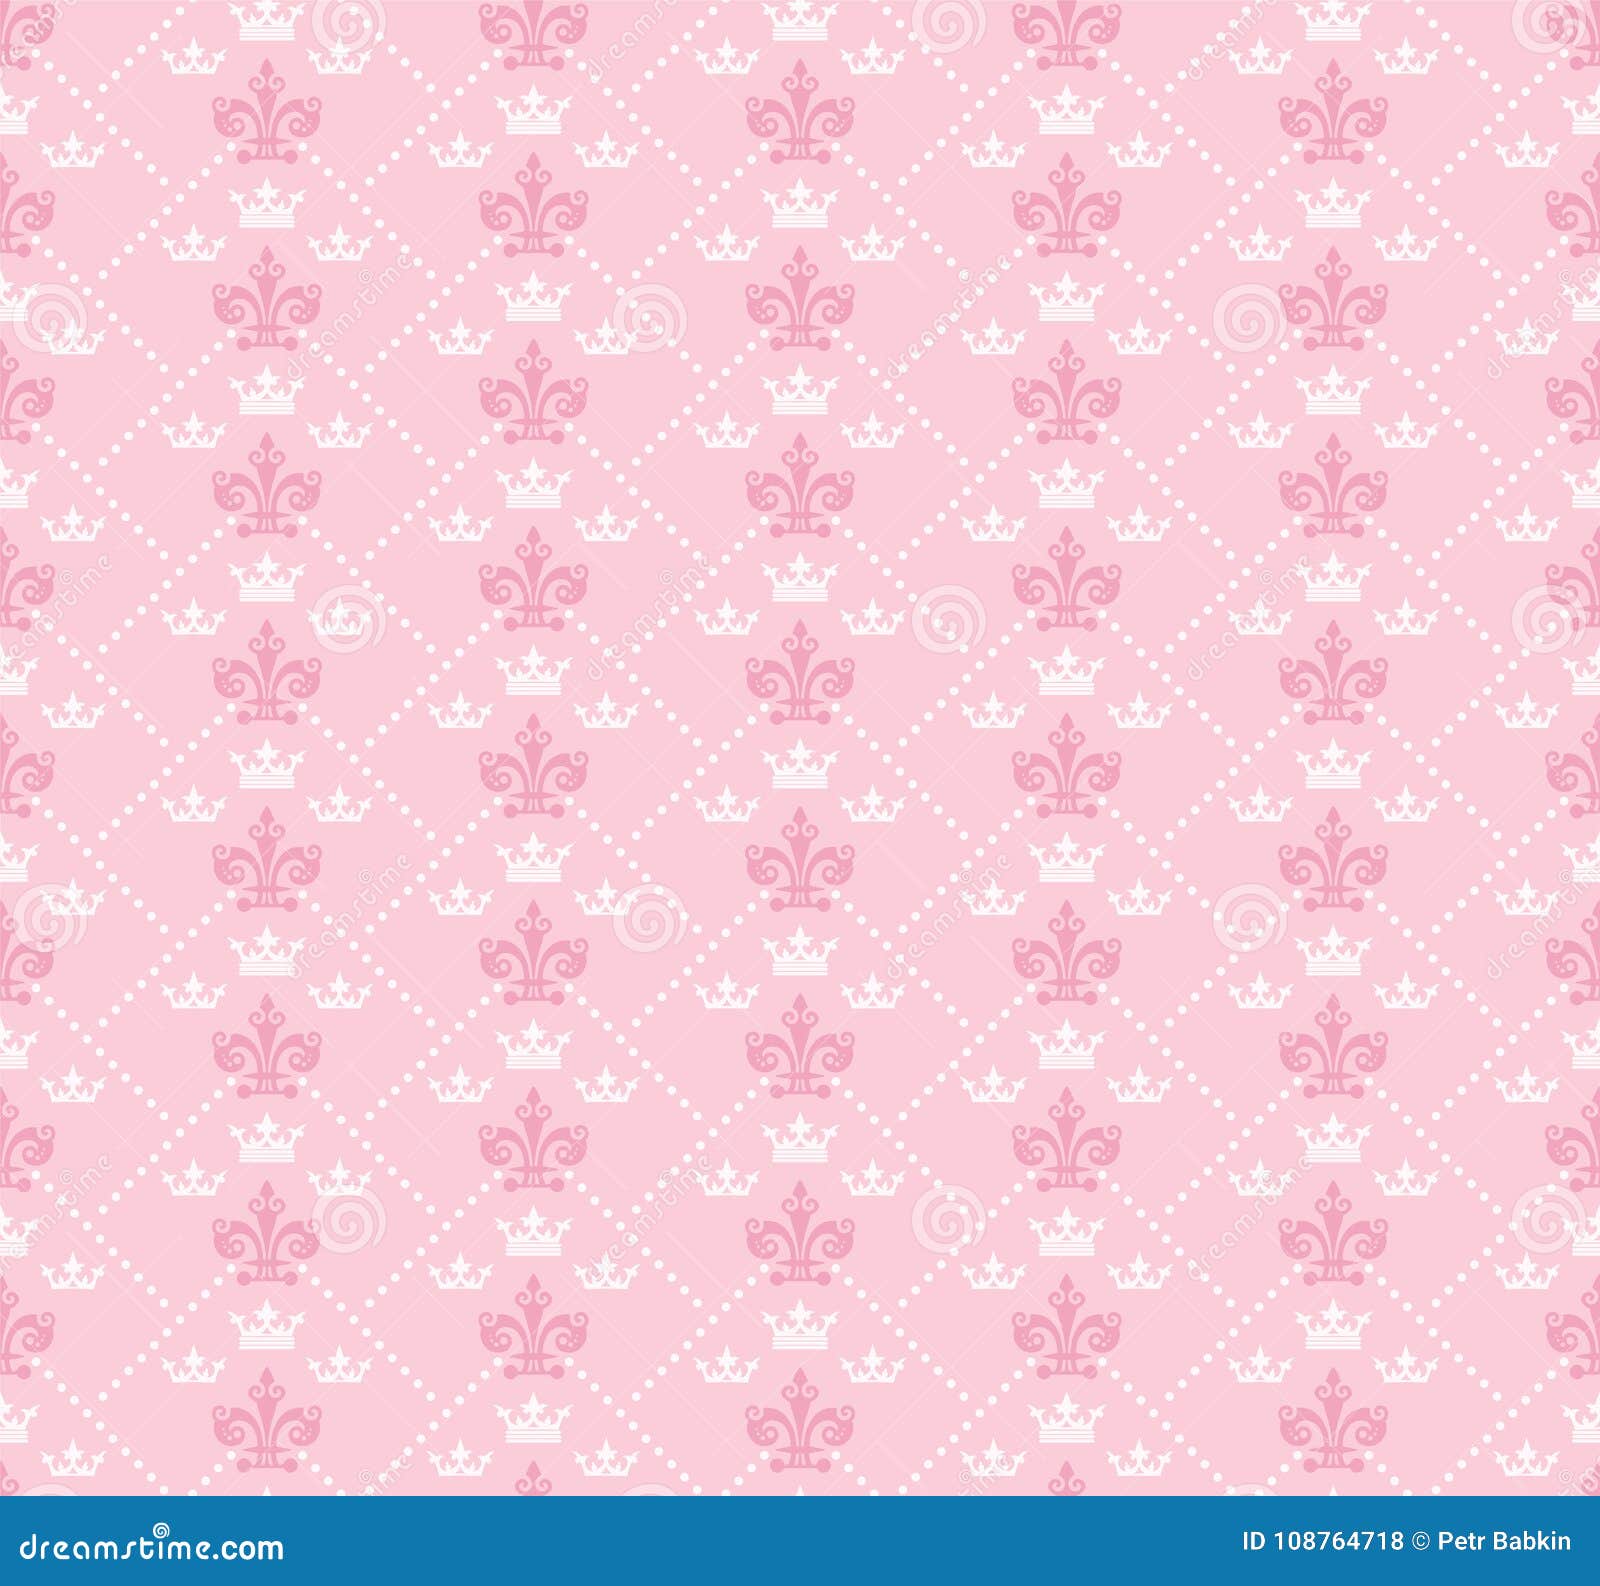 Fondos Rosados Wallpapers e Imágenes en Rosado  Pink wallpaper  backgrounds Background hd wallpaper Pink background